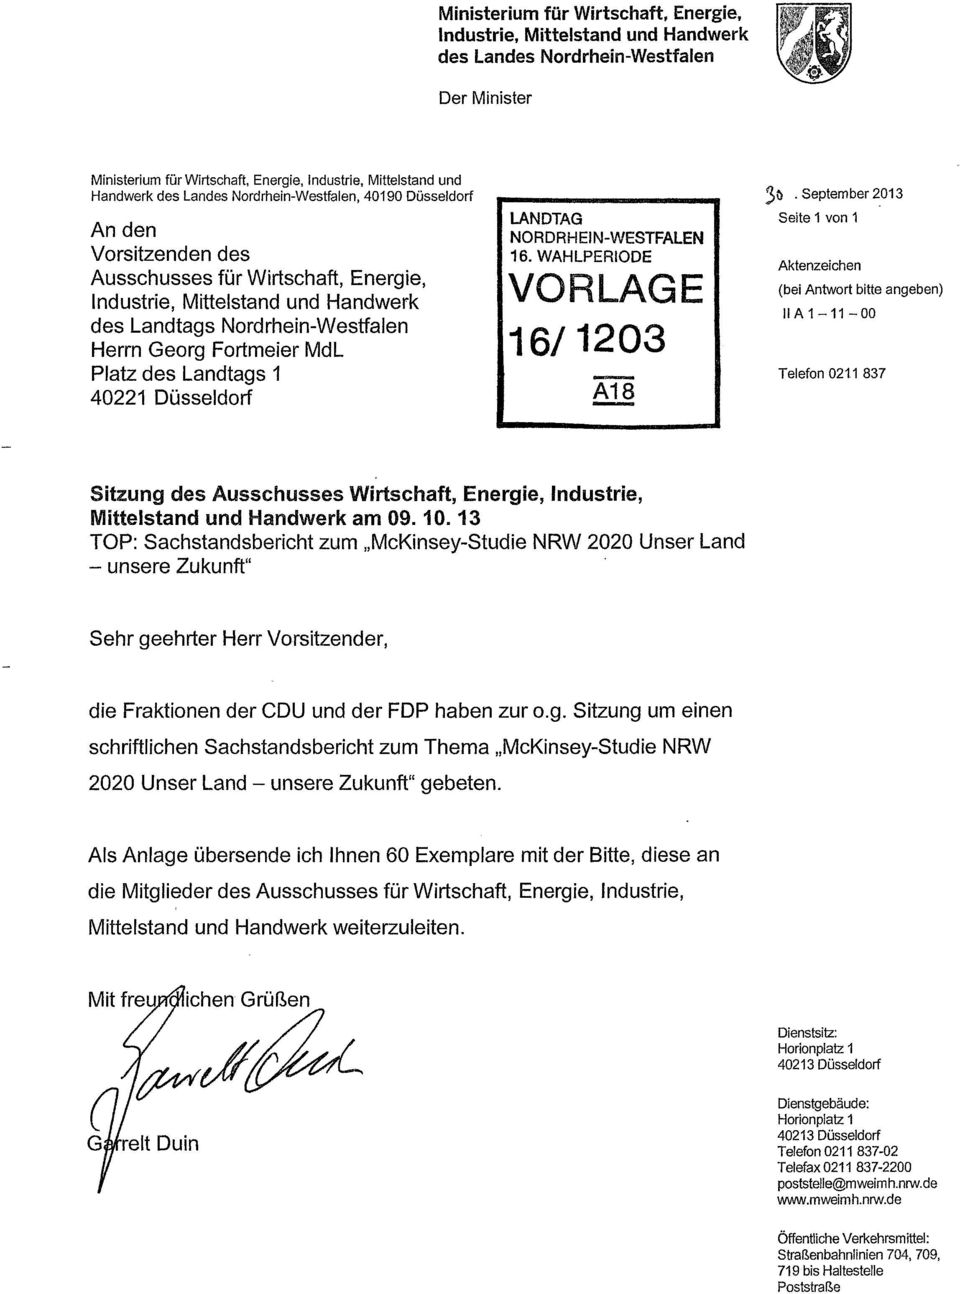 MdL Platz des Landtags 1 40221 Düsseldorf LANDTAG NORDRHEIN-WESTFALEN 16. WAHLPERIODE VORLAGE 16/1203 - A18-3(). September 2.